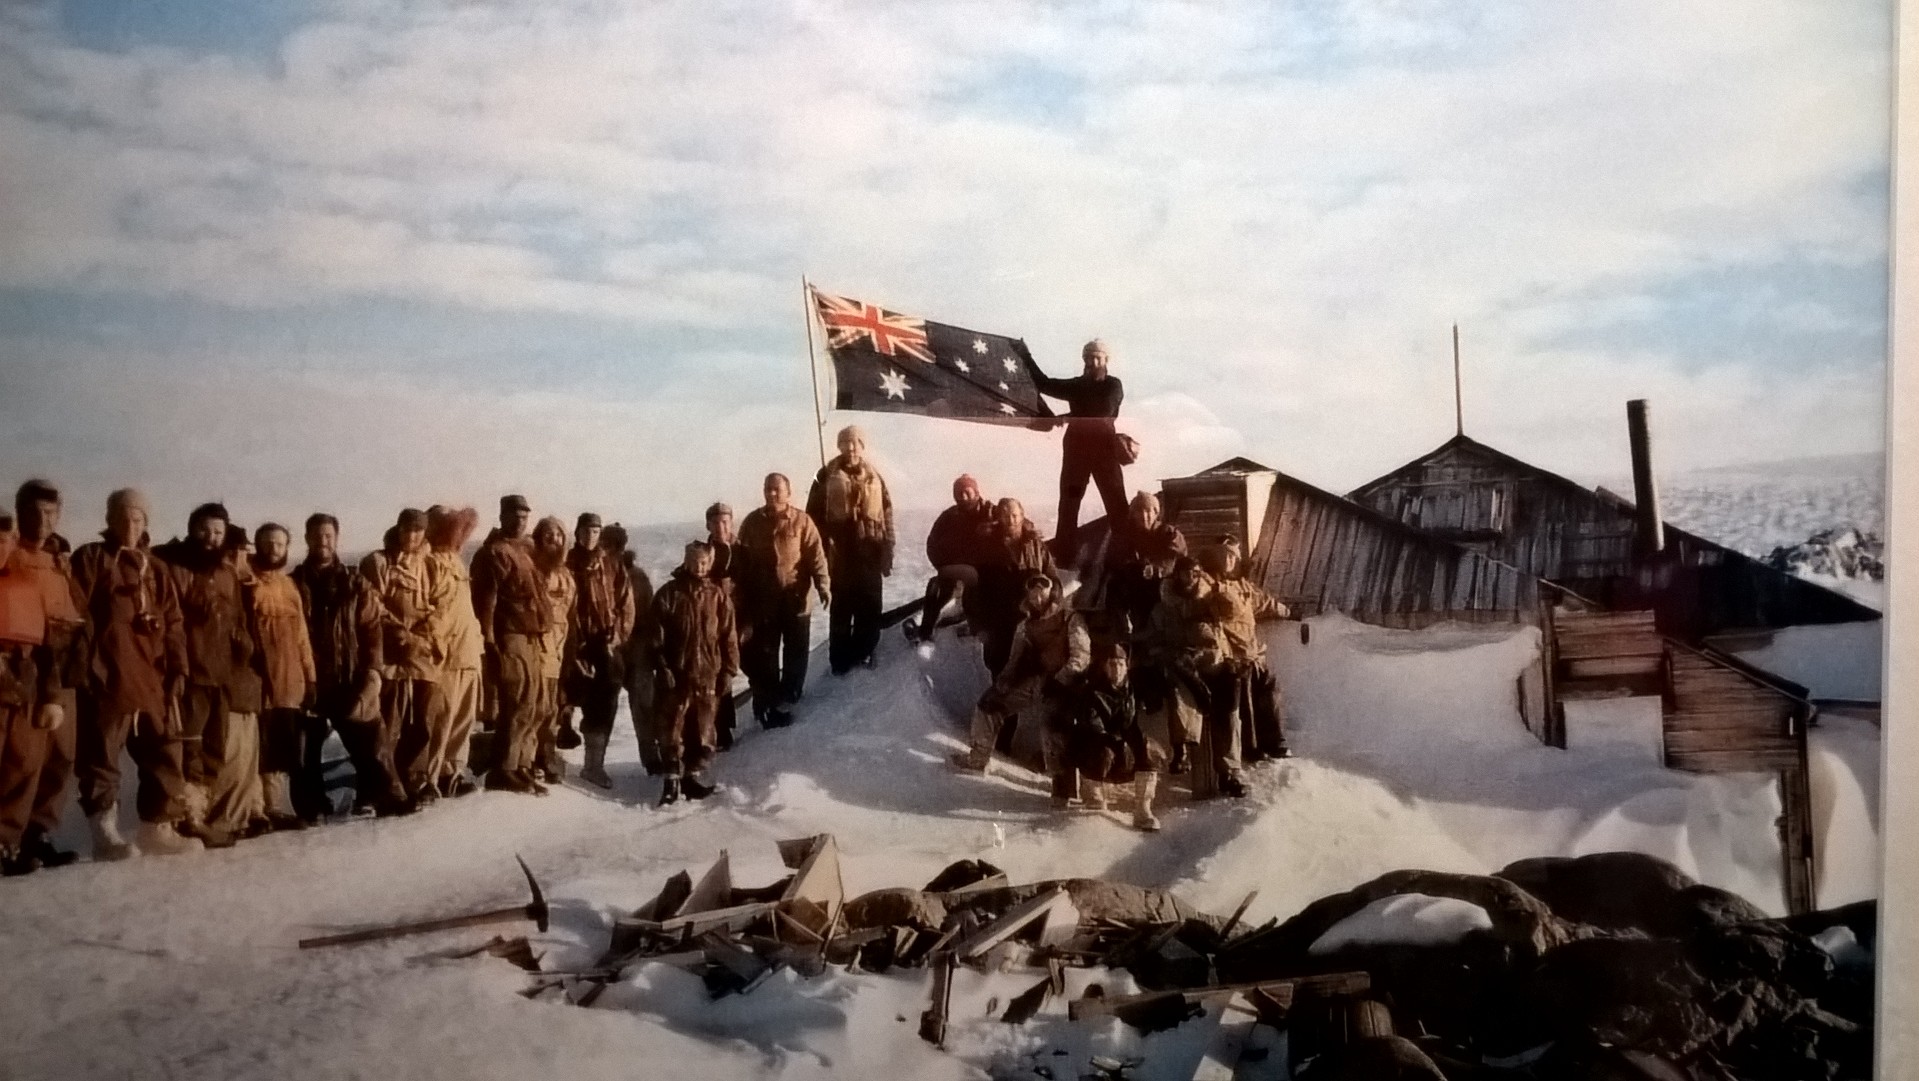 Esploratori australiani in Antartide espongono la bandiera australiana